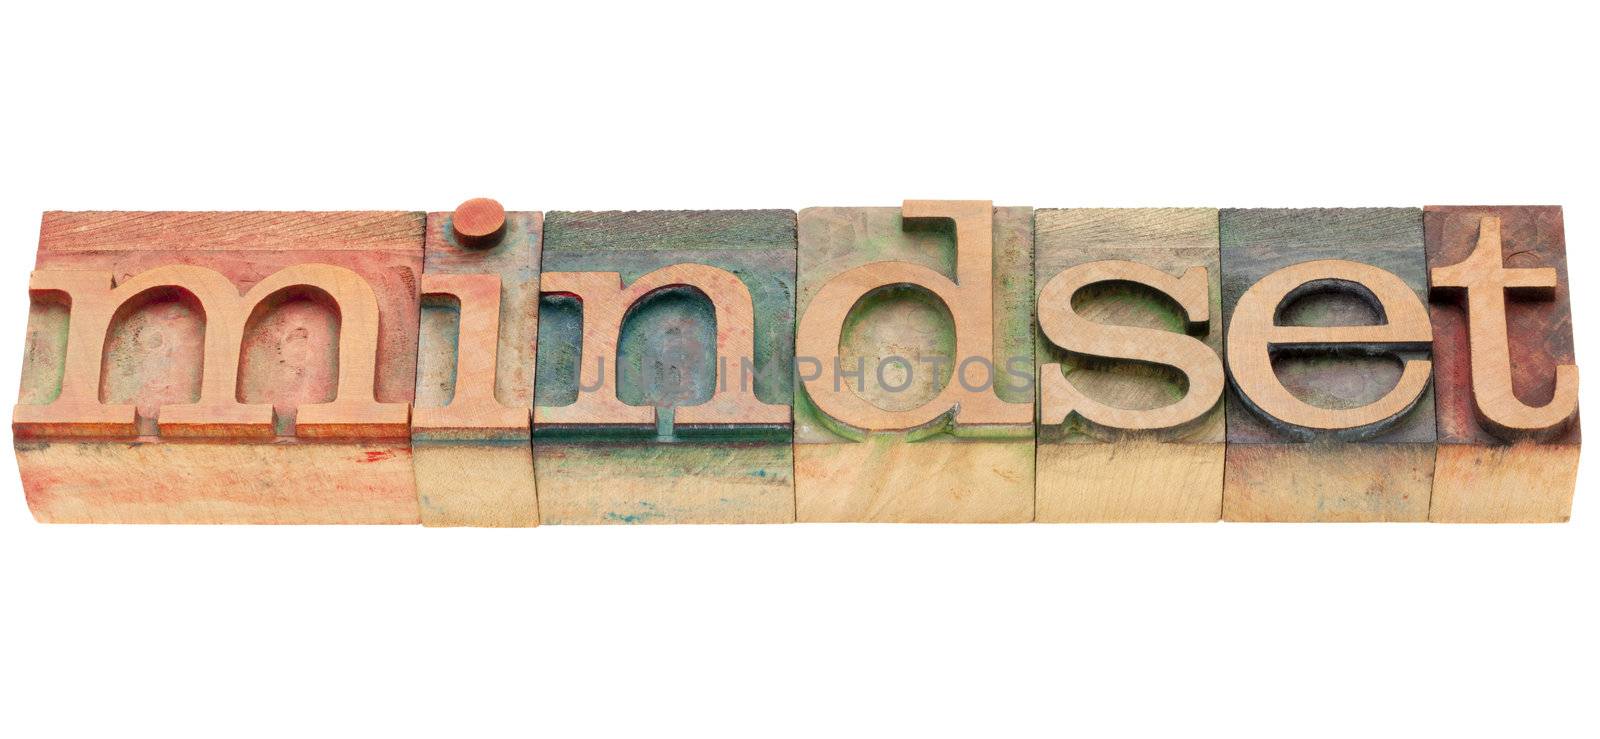 mindset  - isolated word in vintage wood letterpress printing blocks